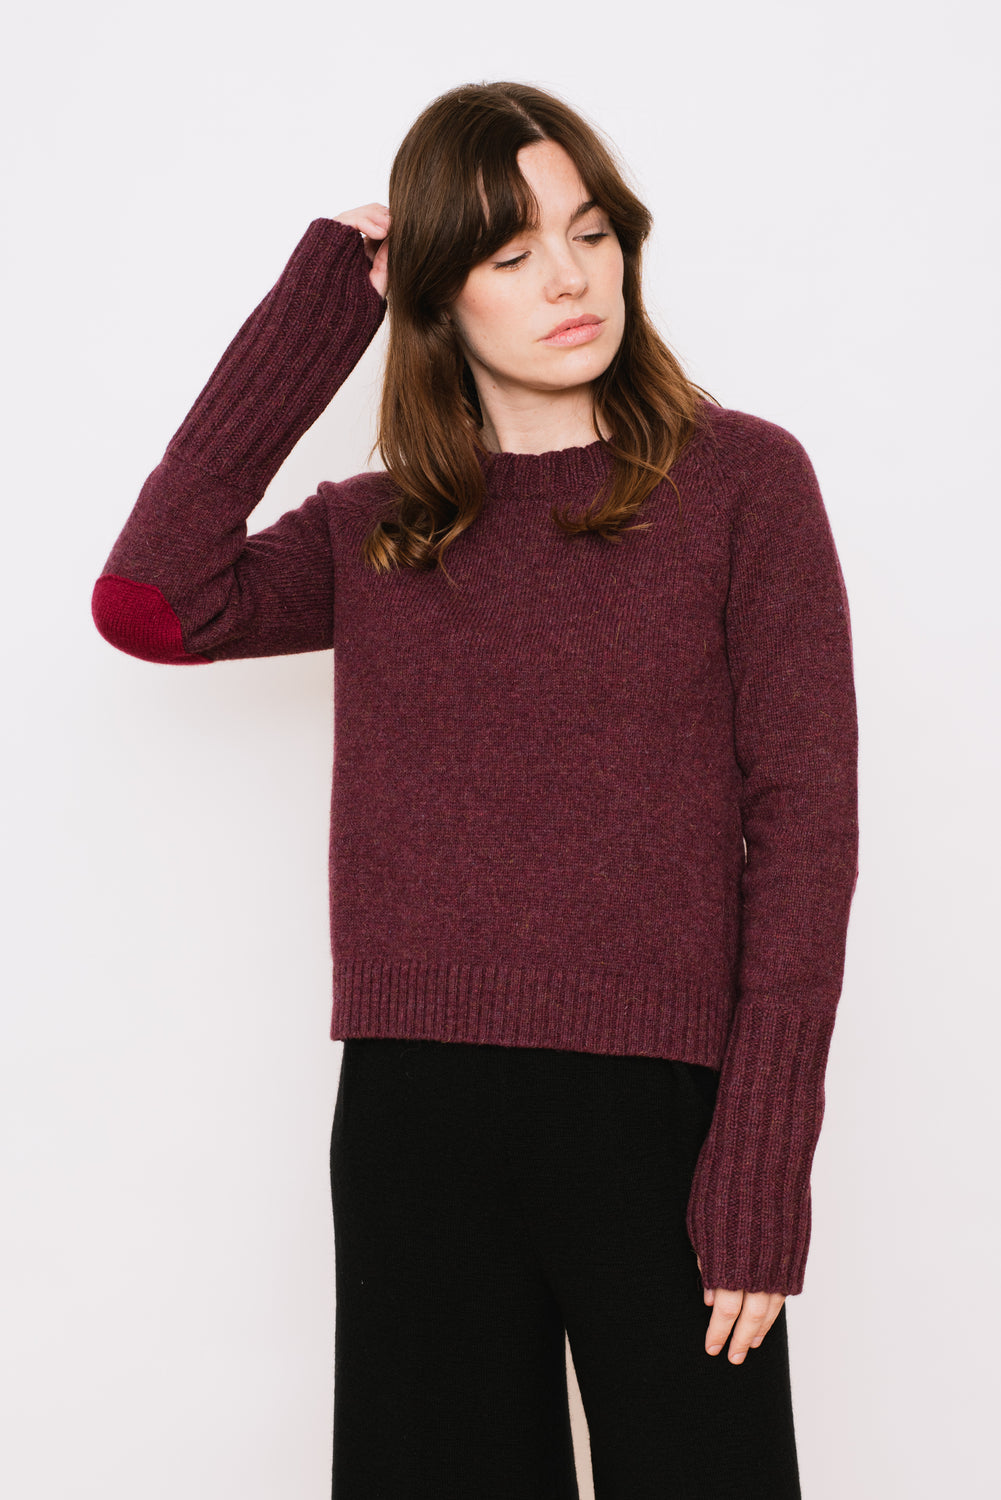 Pullover Sweater, Wine